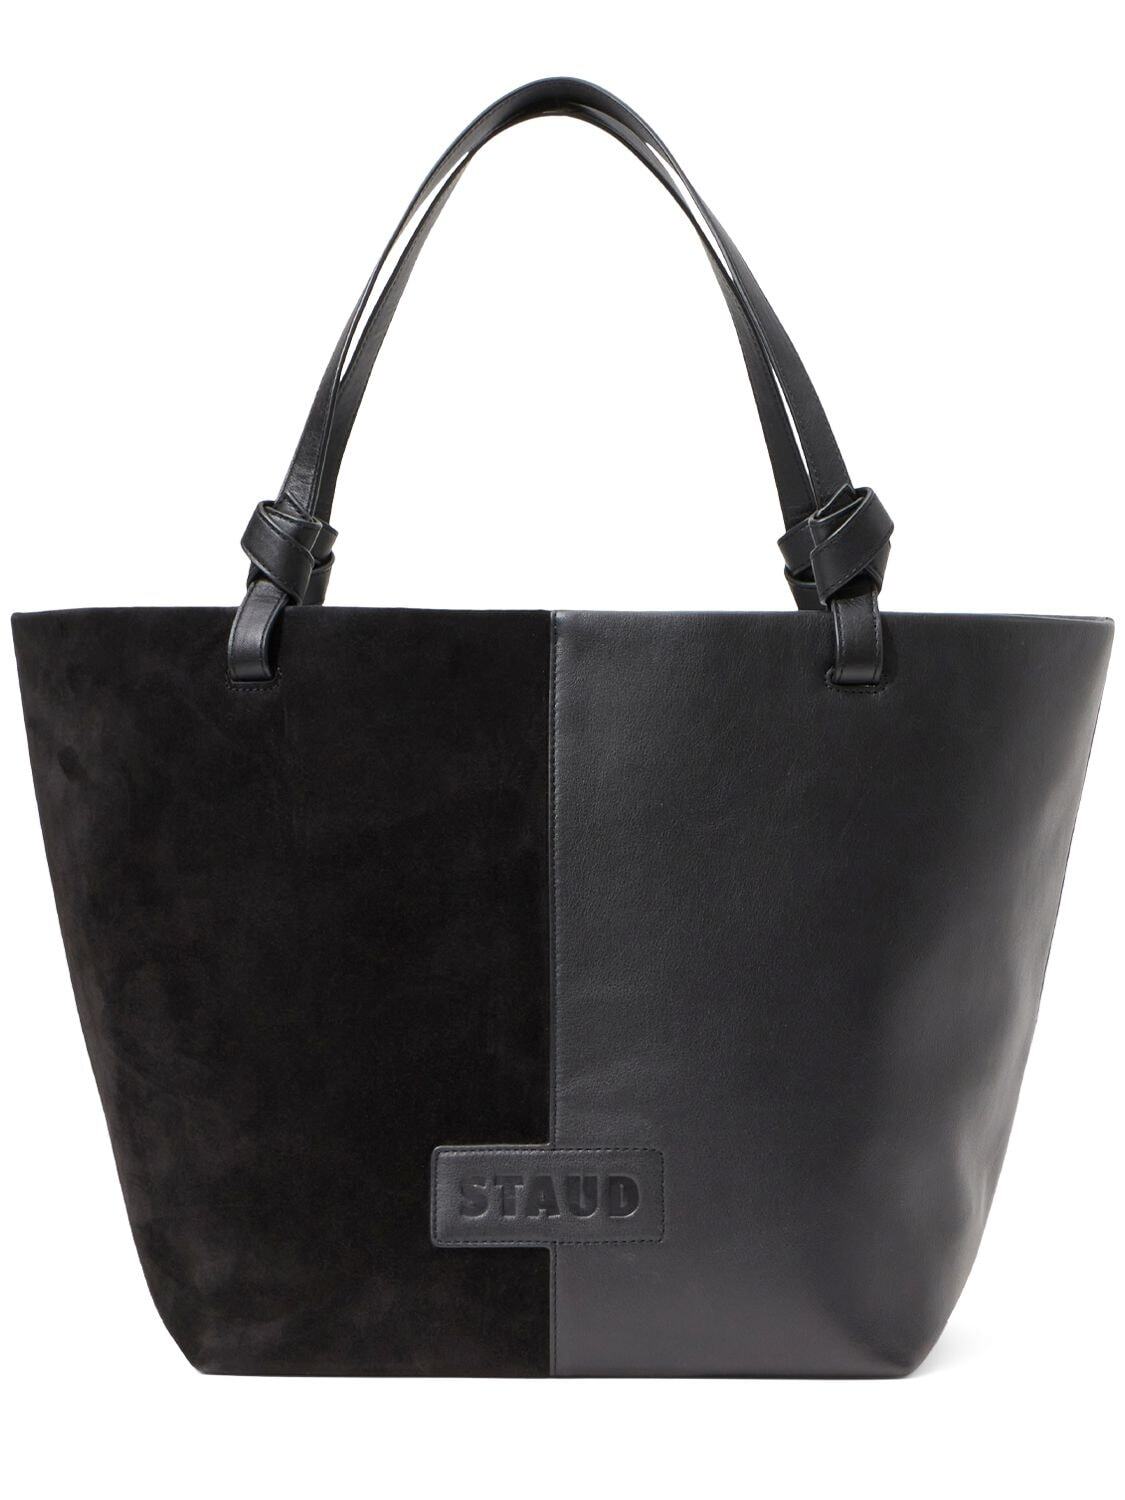 STAUD Ida Leather Tote Bag in black